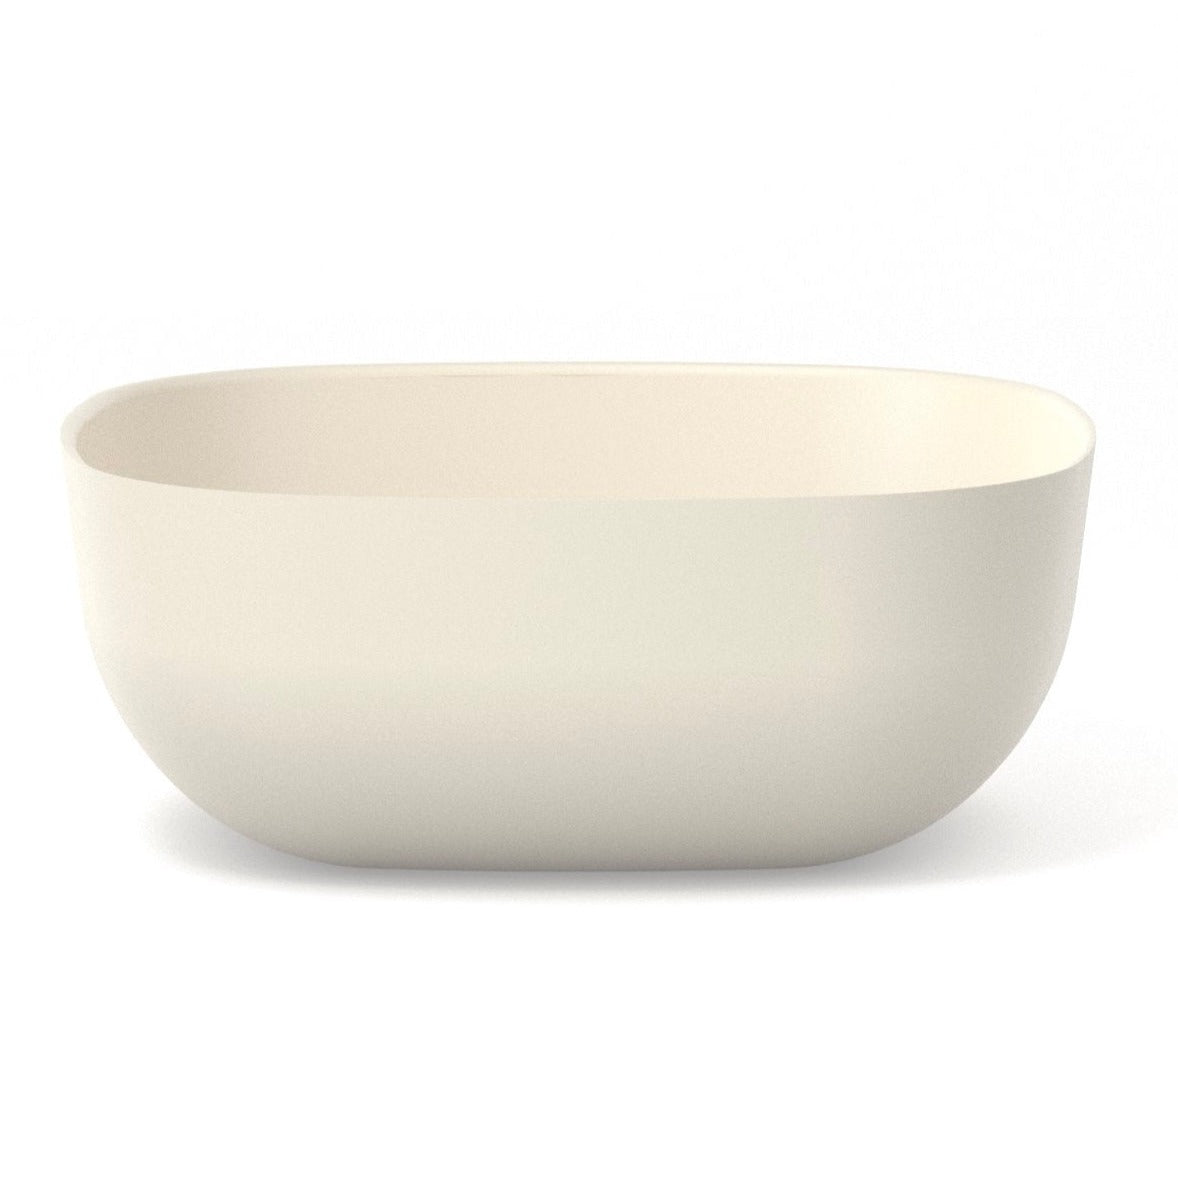 100 oz Medium Salad Bowl  - Off White